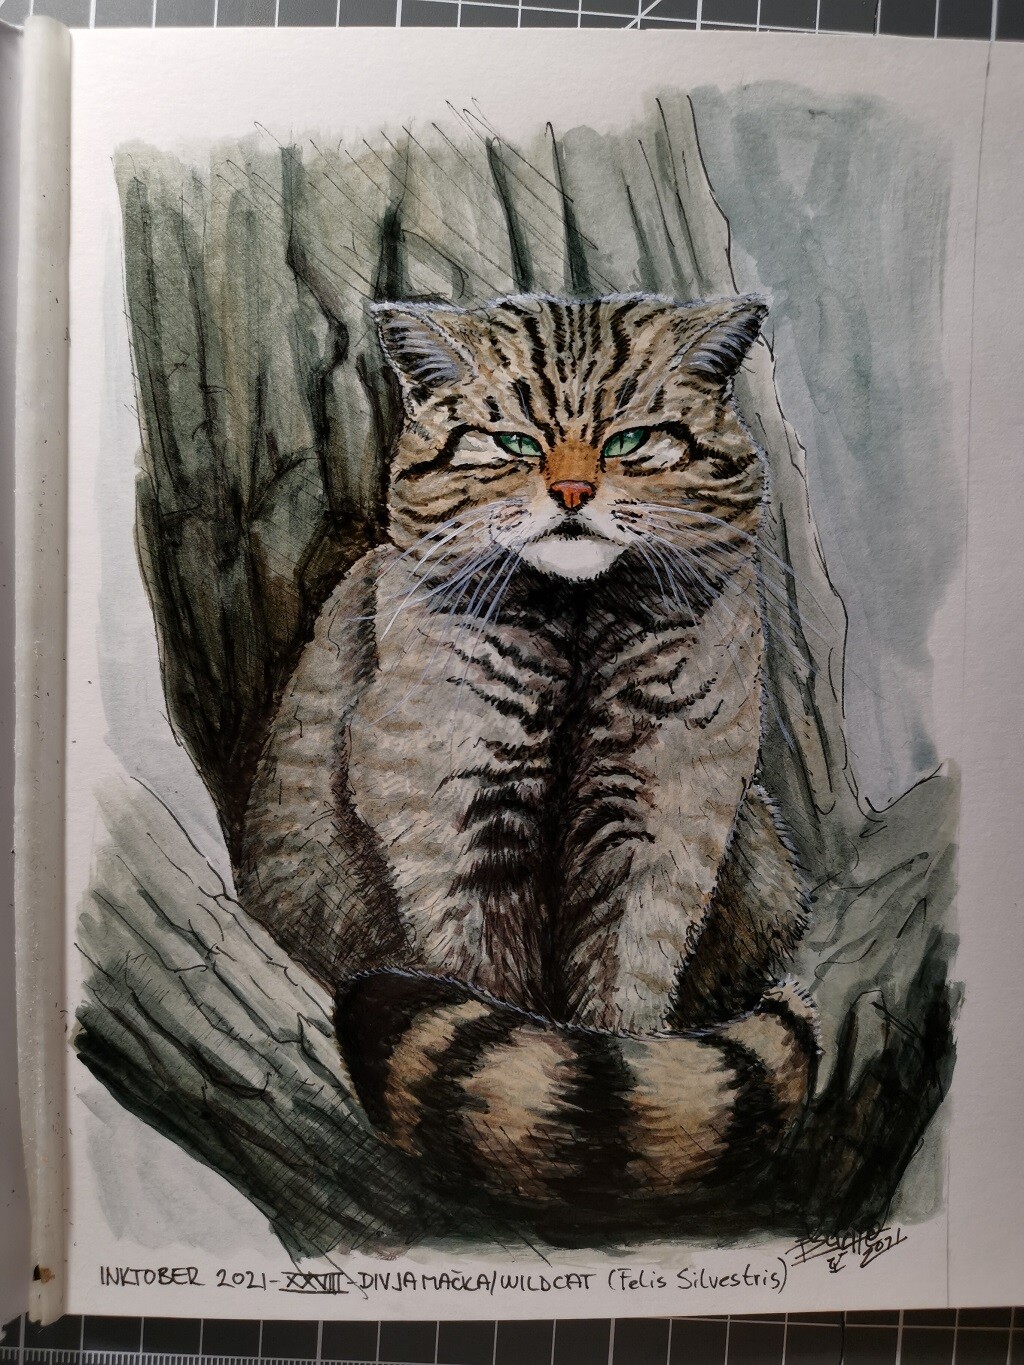 Divja Mačka/European Wildcat (Felis Silvestris)